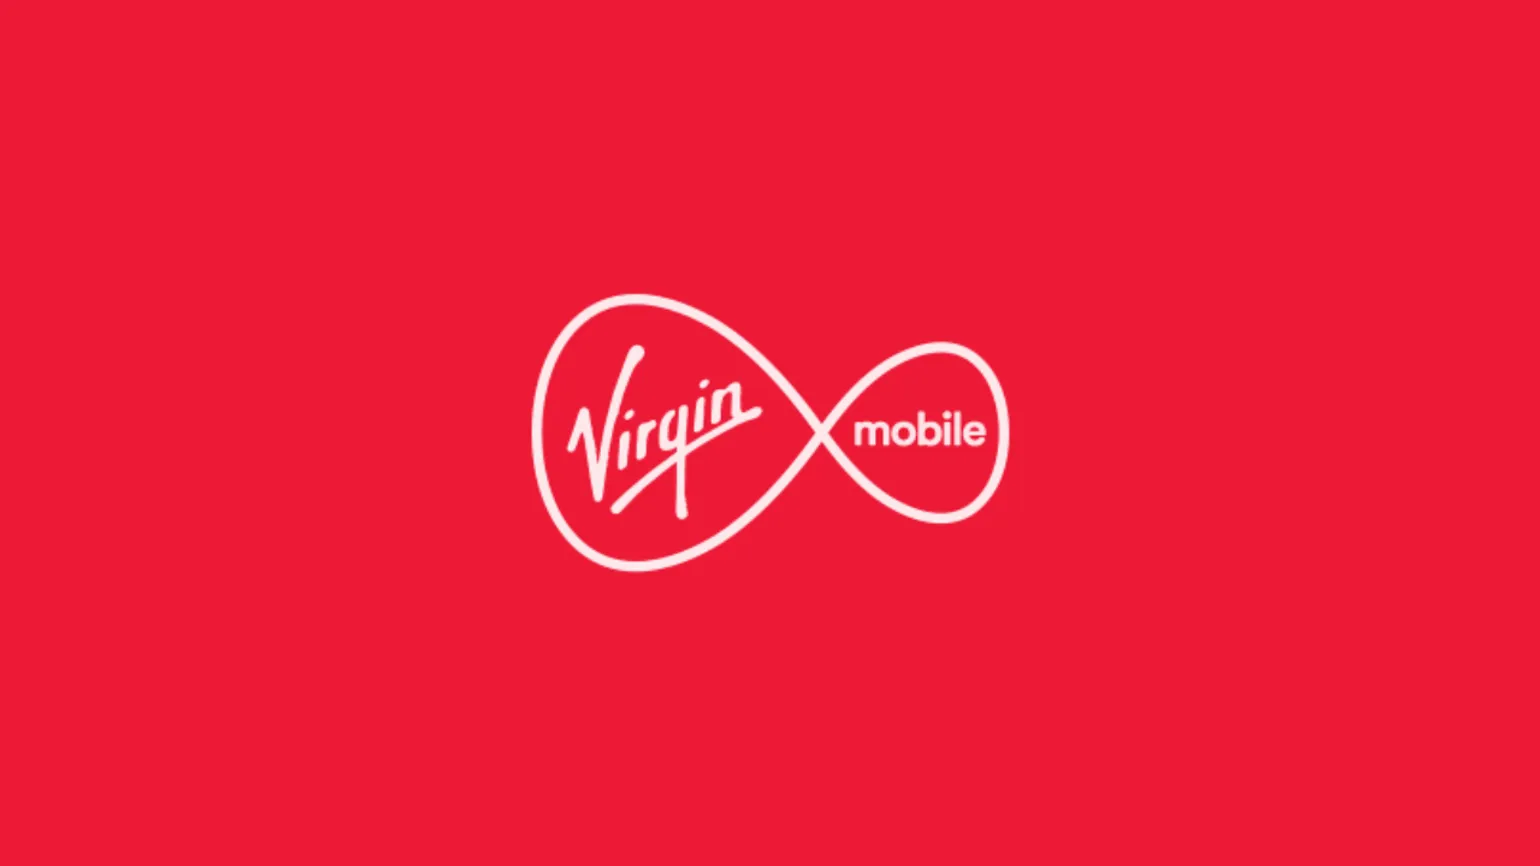 Virgin Mobile price increases